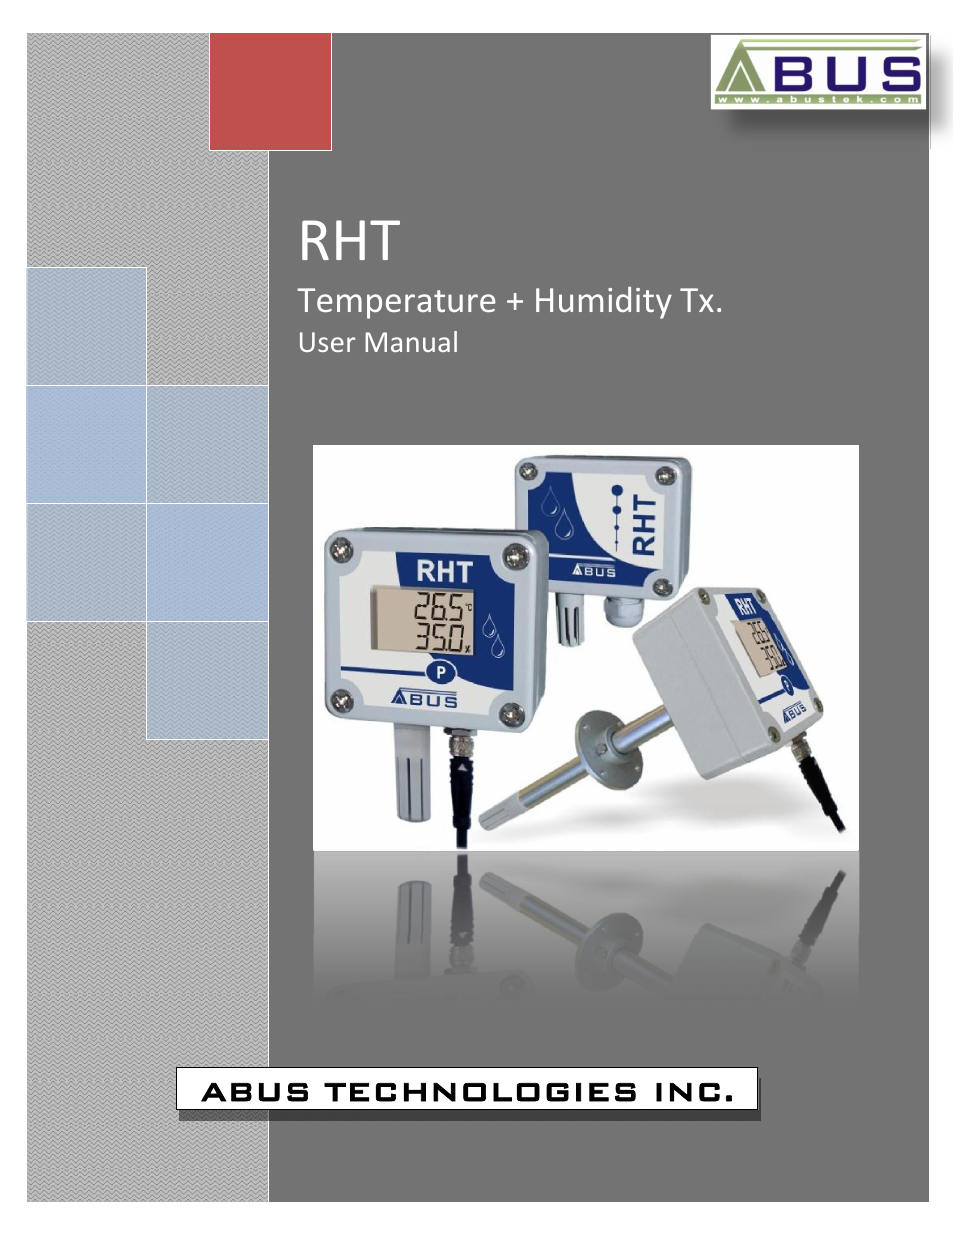 RHT-DM Series Relative Humidity Transmitter